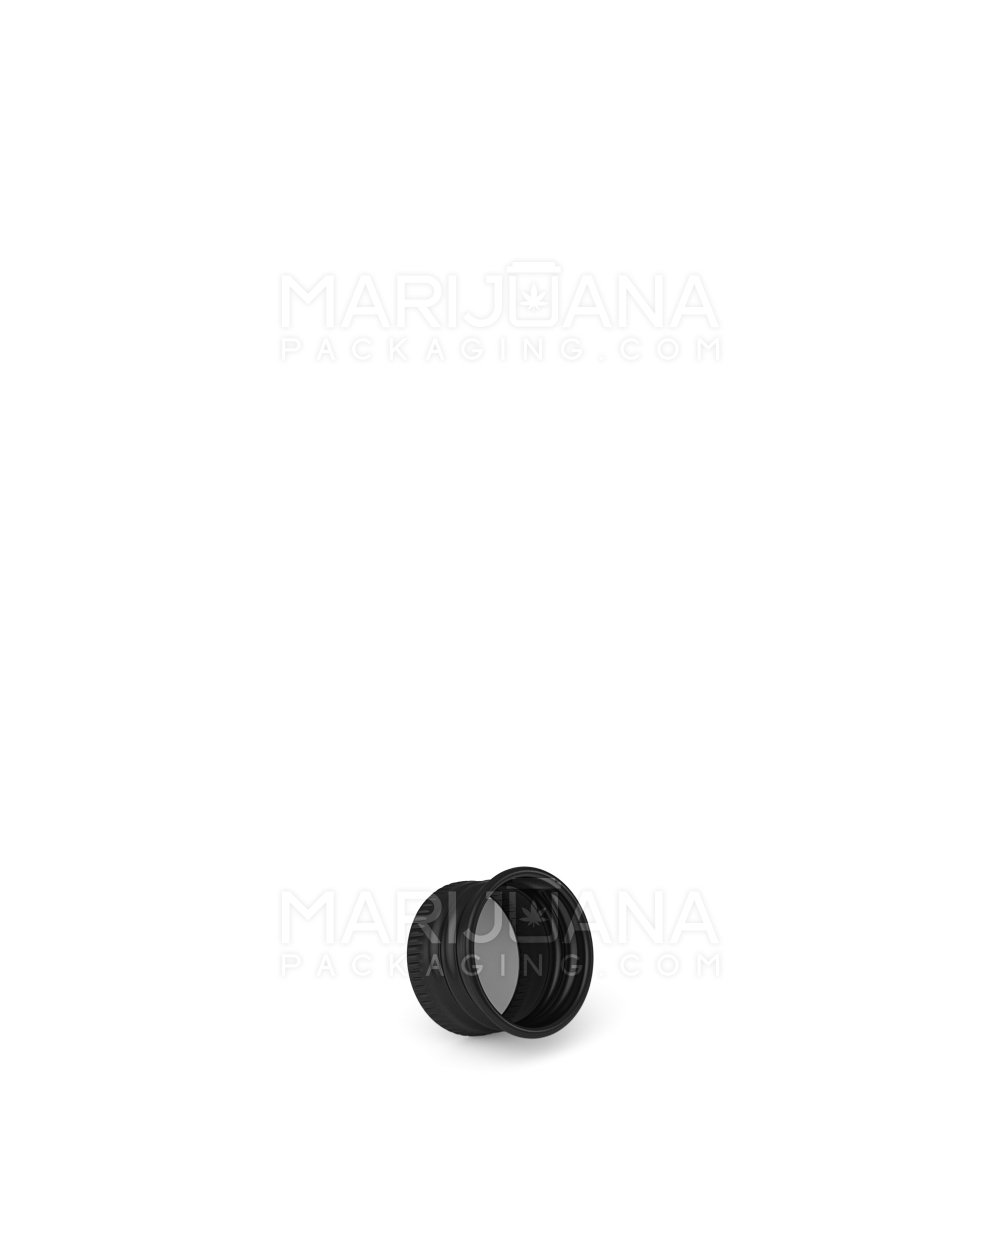 Ribbed Screw Top Metal Caps w/ Foam Liner | 18mm - Glossy Black - 400 Count - 2